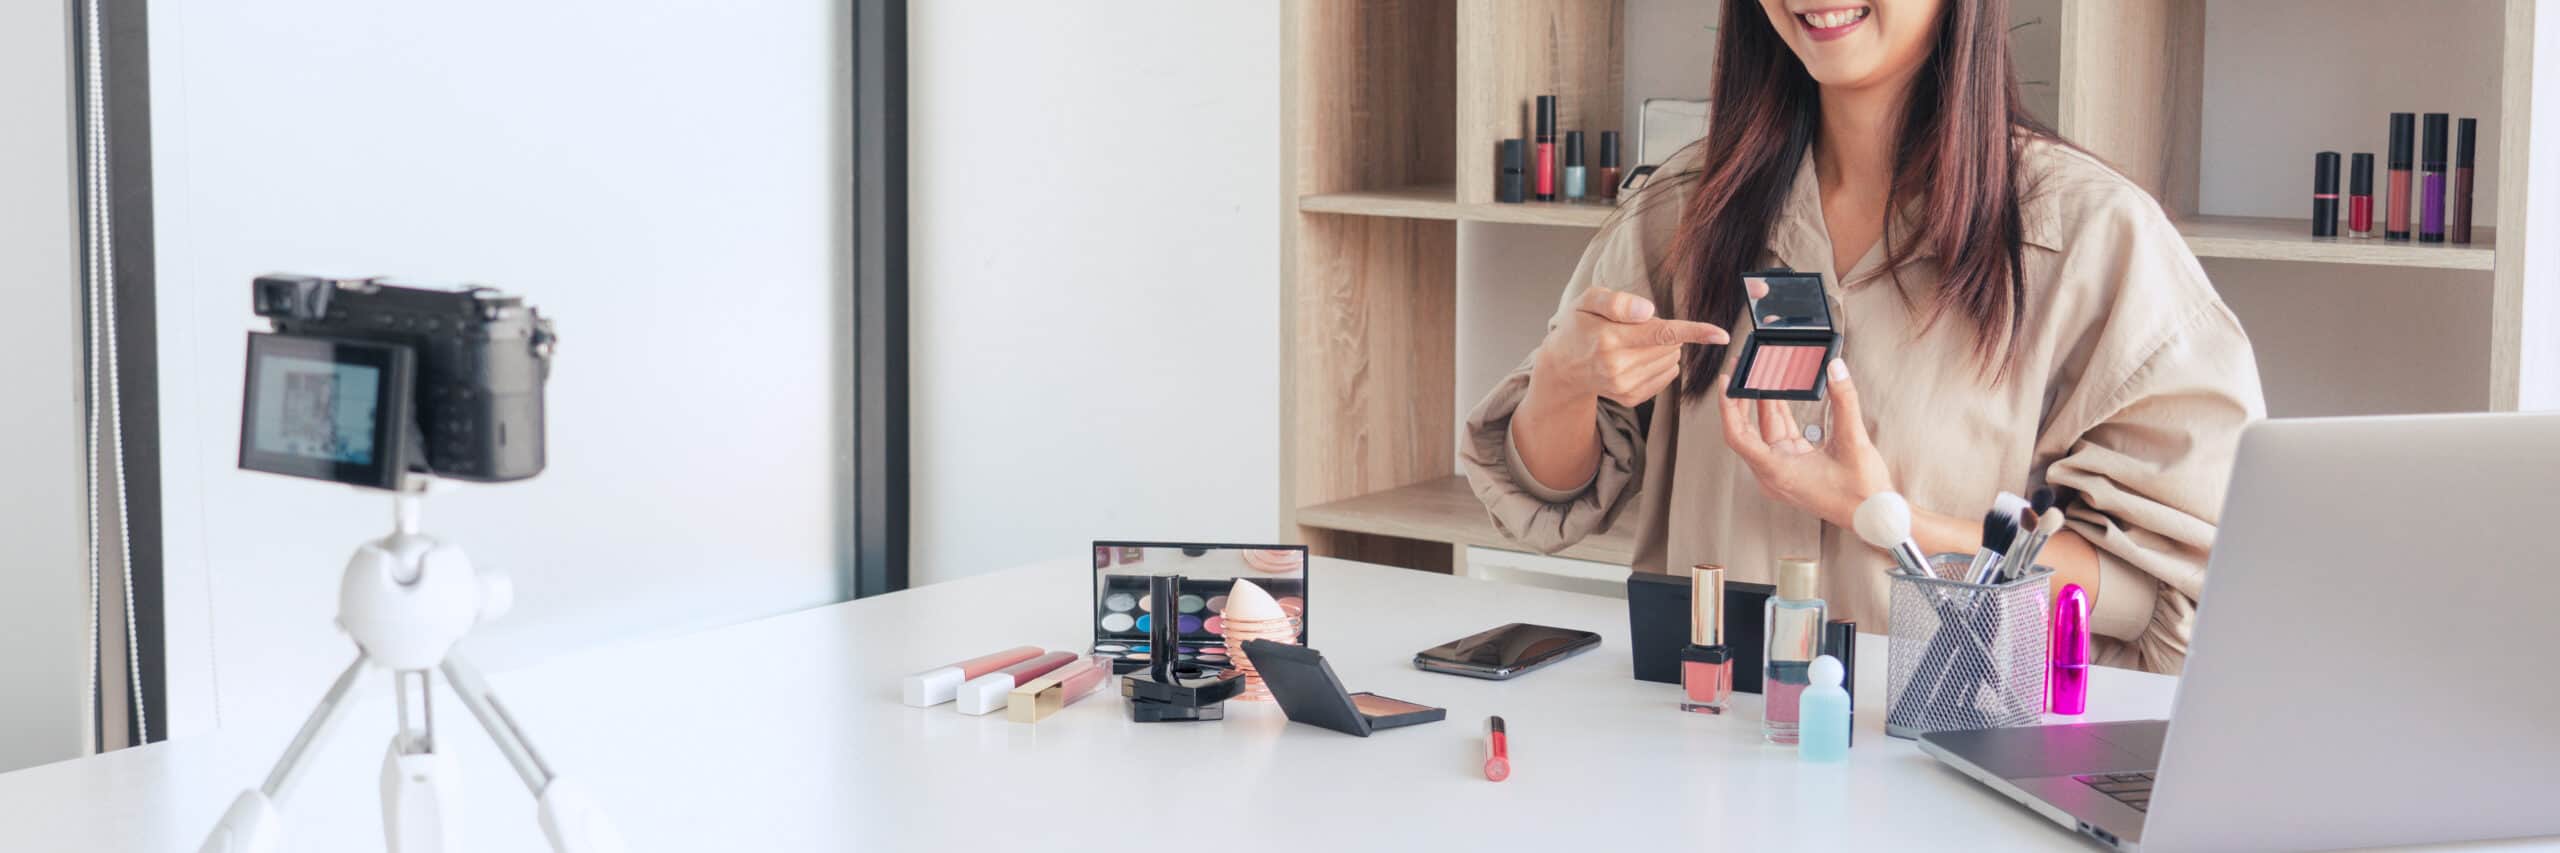 Makeup Beauty fashion blogger recording video presenting makeup